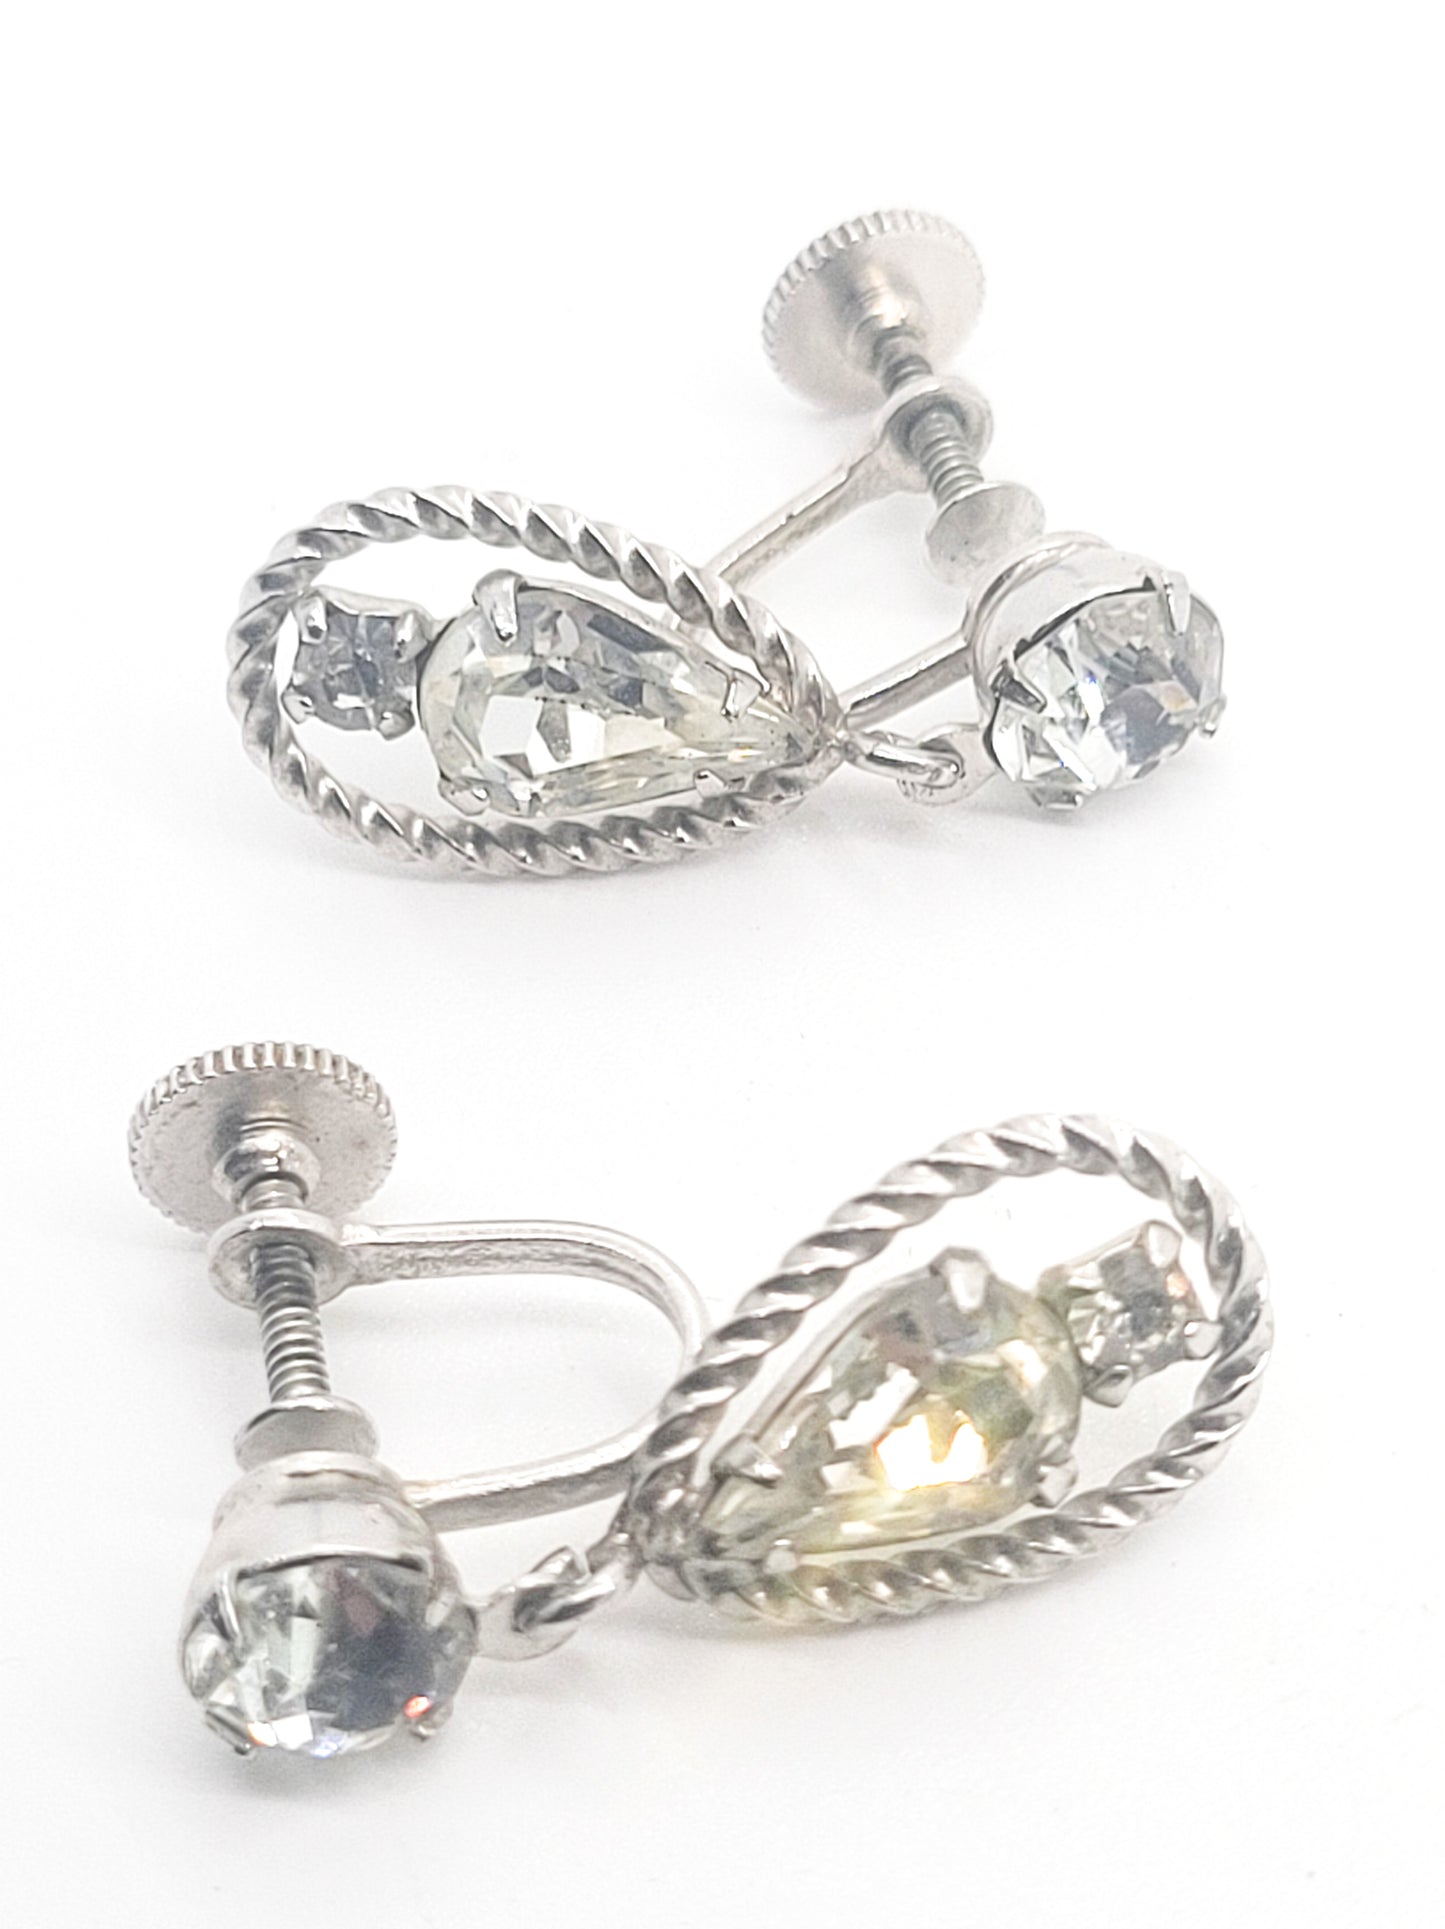 Twisted rope clear rhinestone silver toned screw back earrings